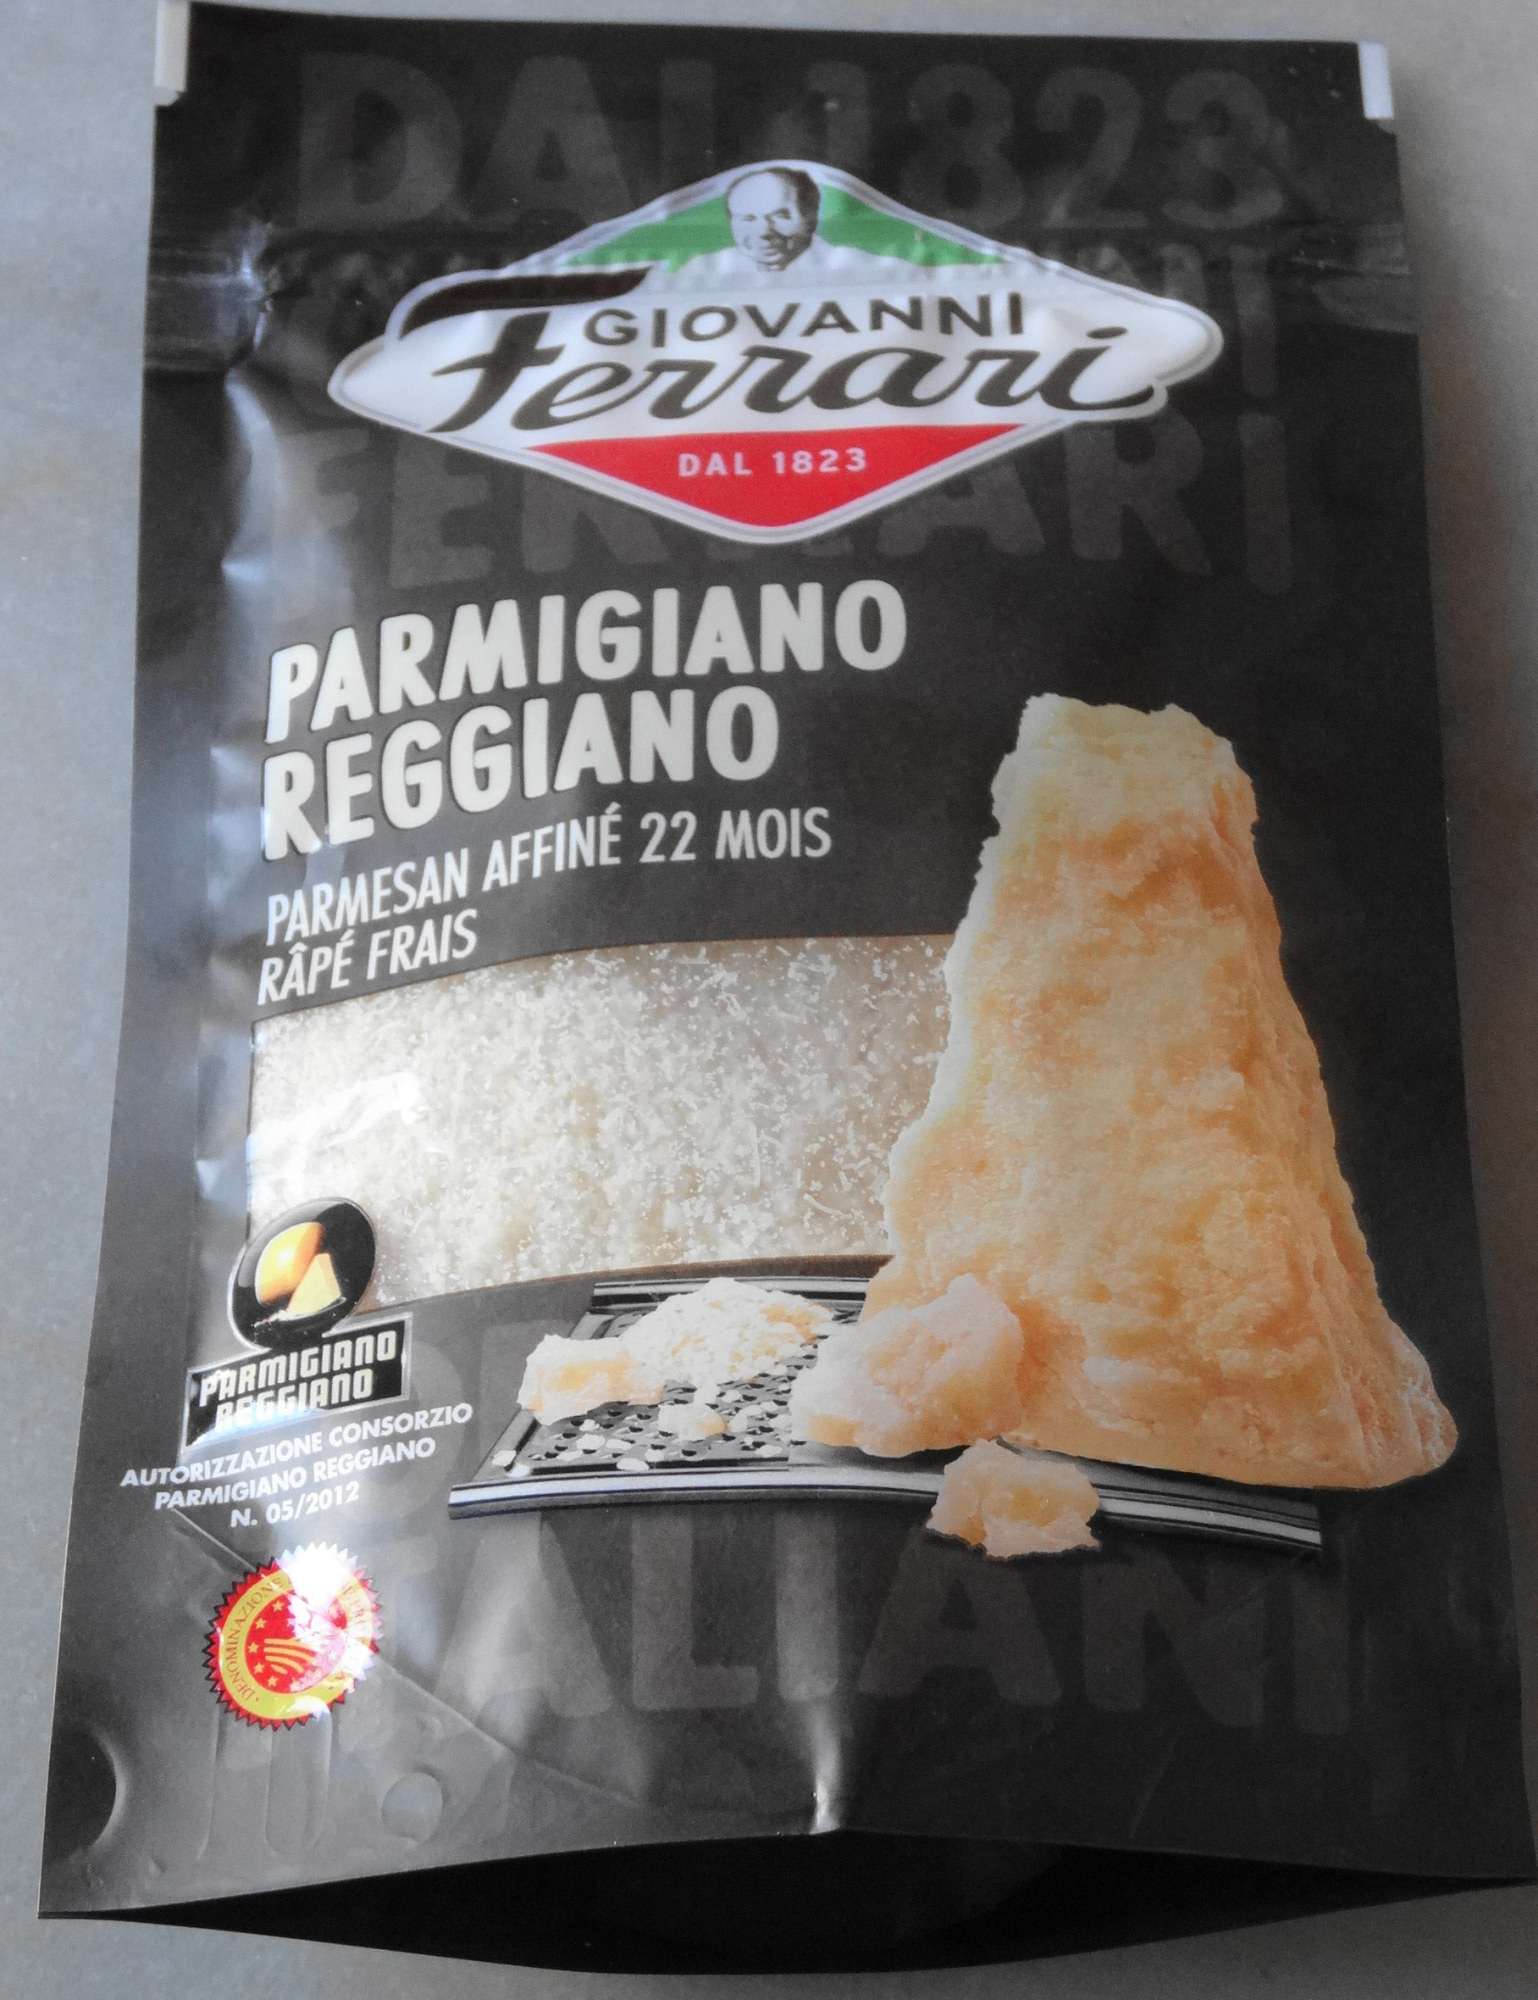 Parmigiano Reggiano AOP râpé (28% MG) - 70 g - Giovanni Ferrari - Produit